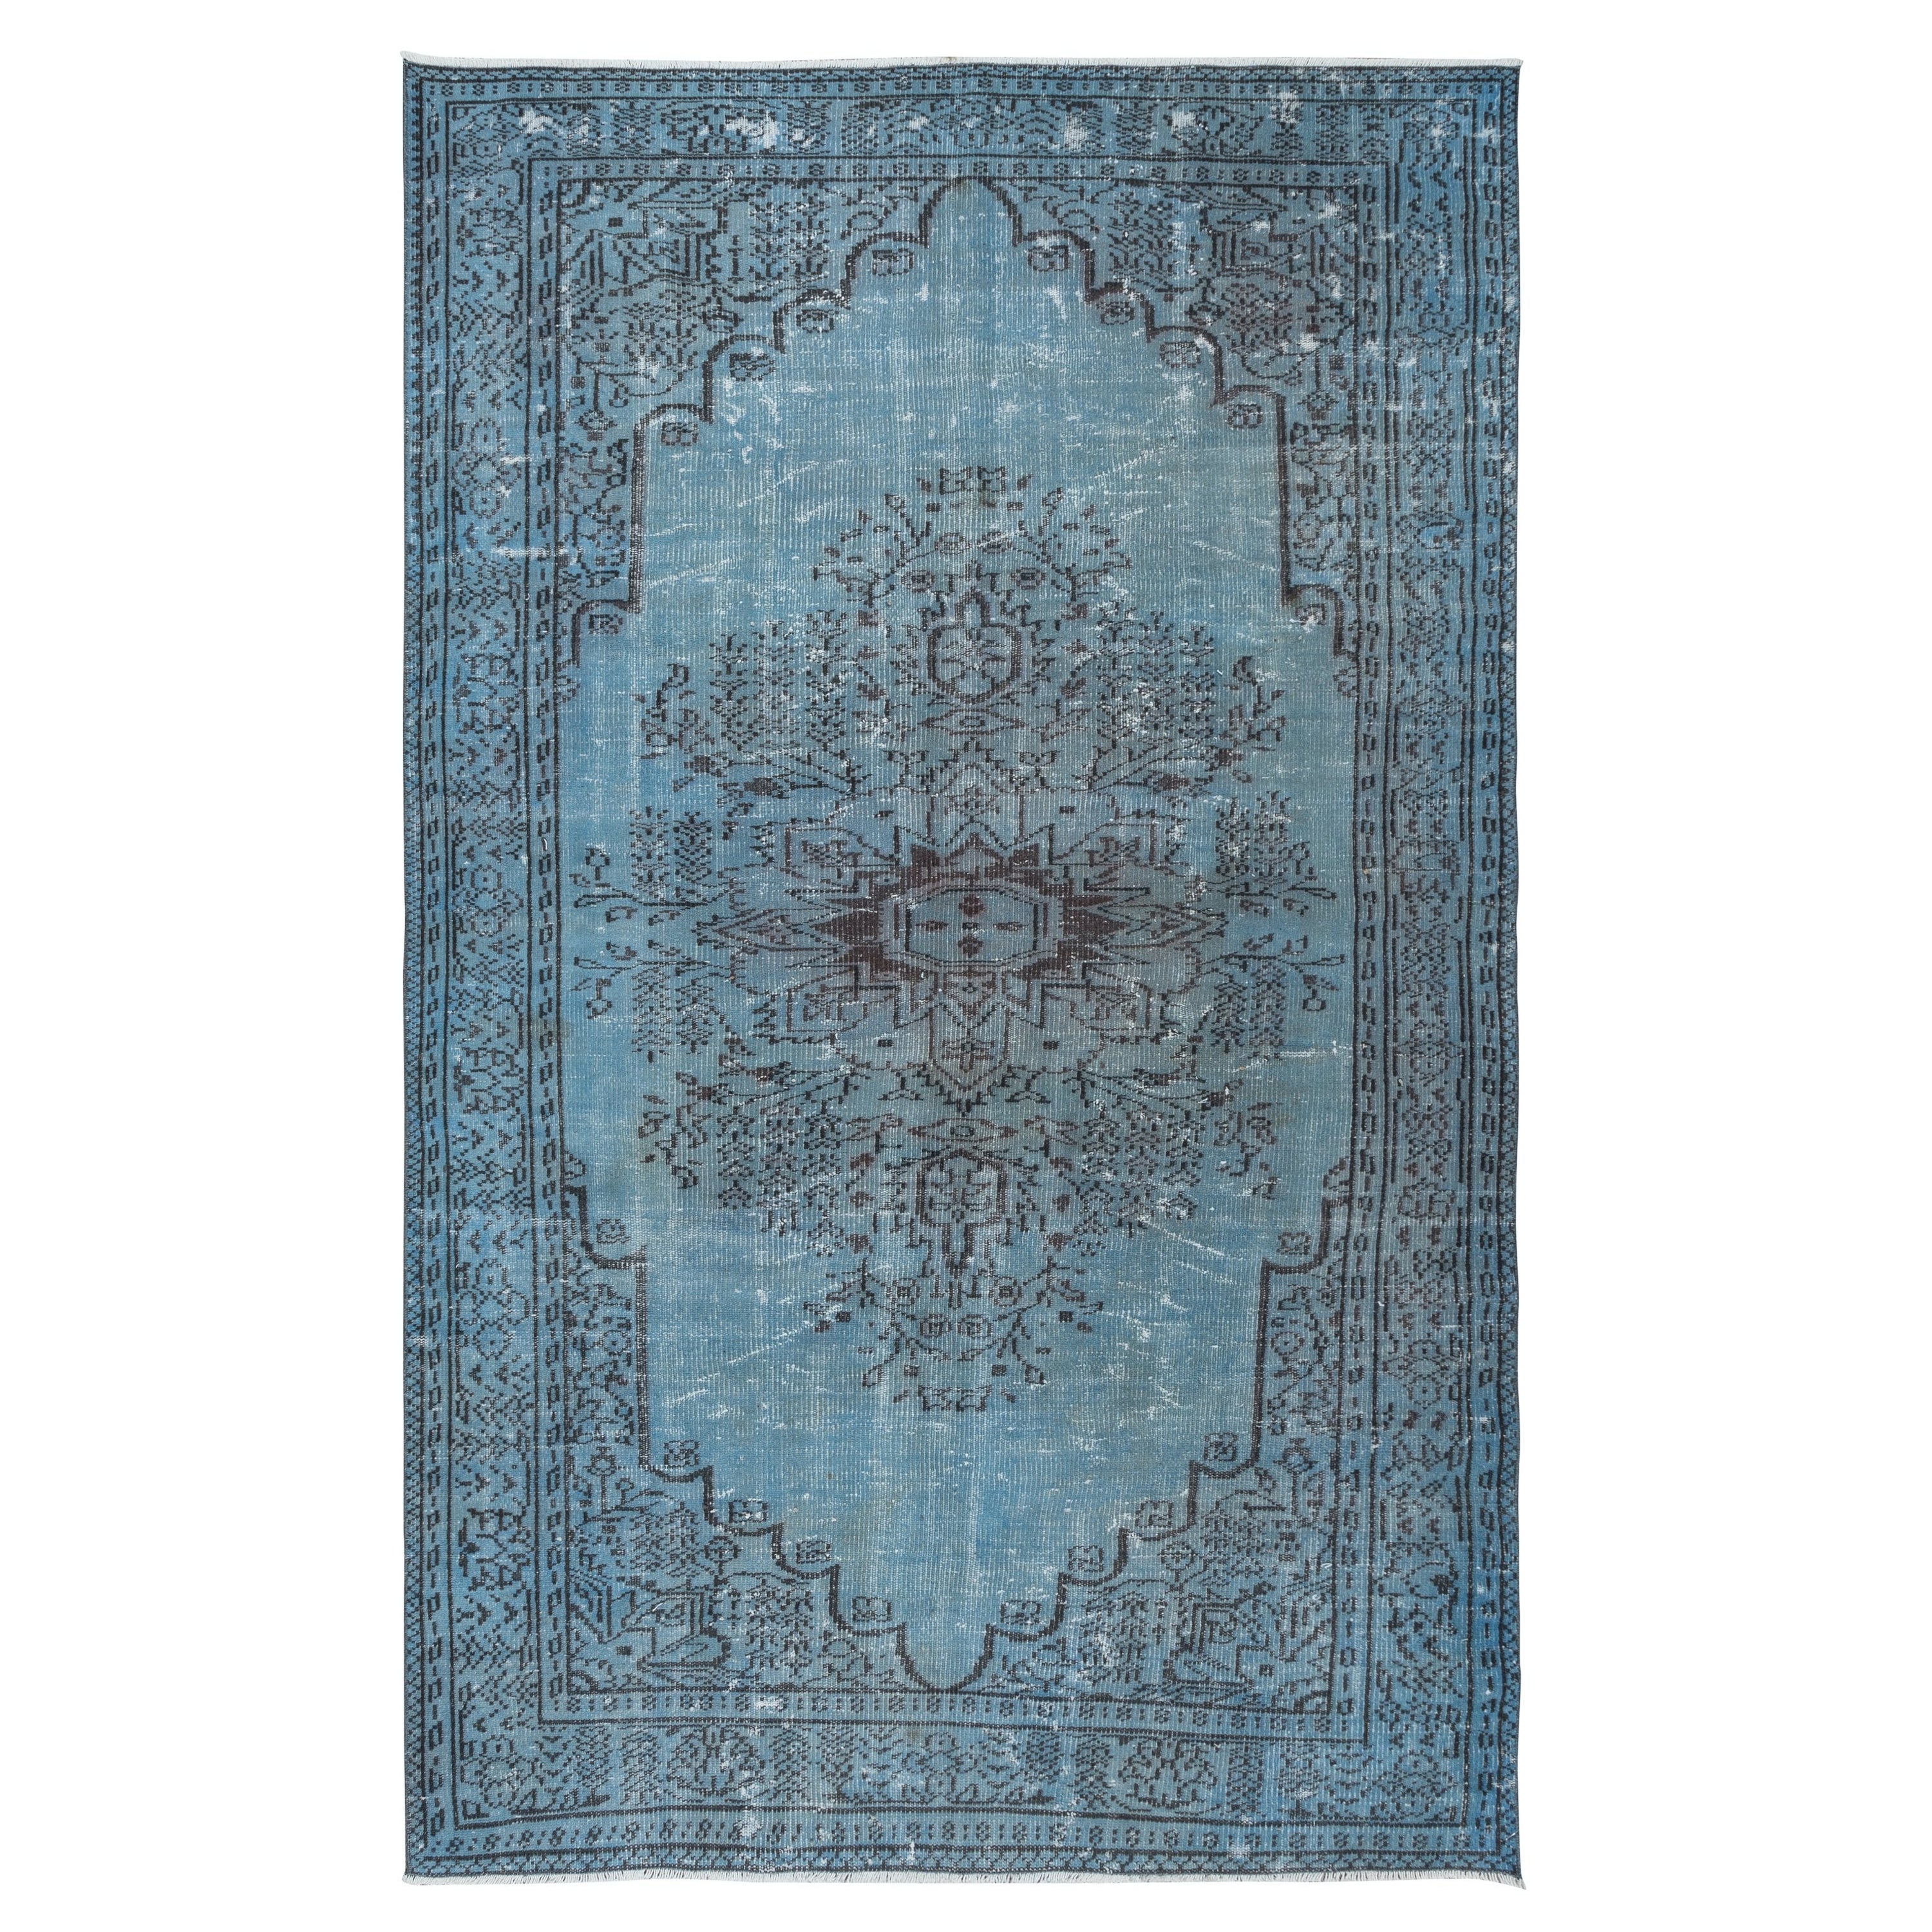 6.2x10 Ft Modern Light Blue Area Rug, Room Size Handmade Overdyed Turkish Carpet For Sale